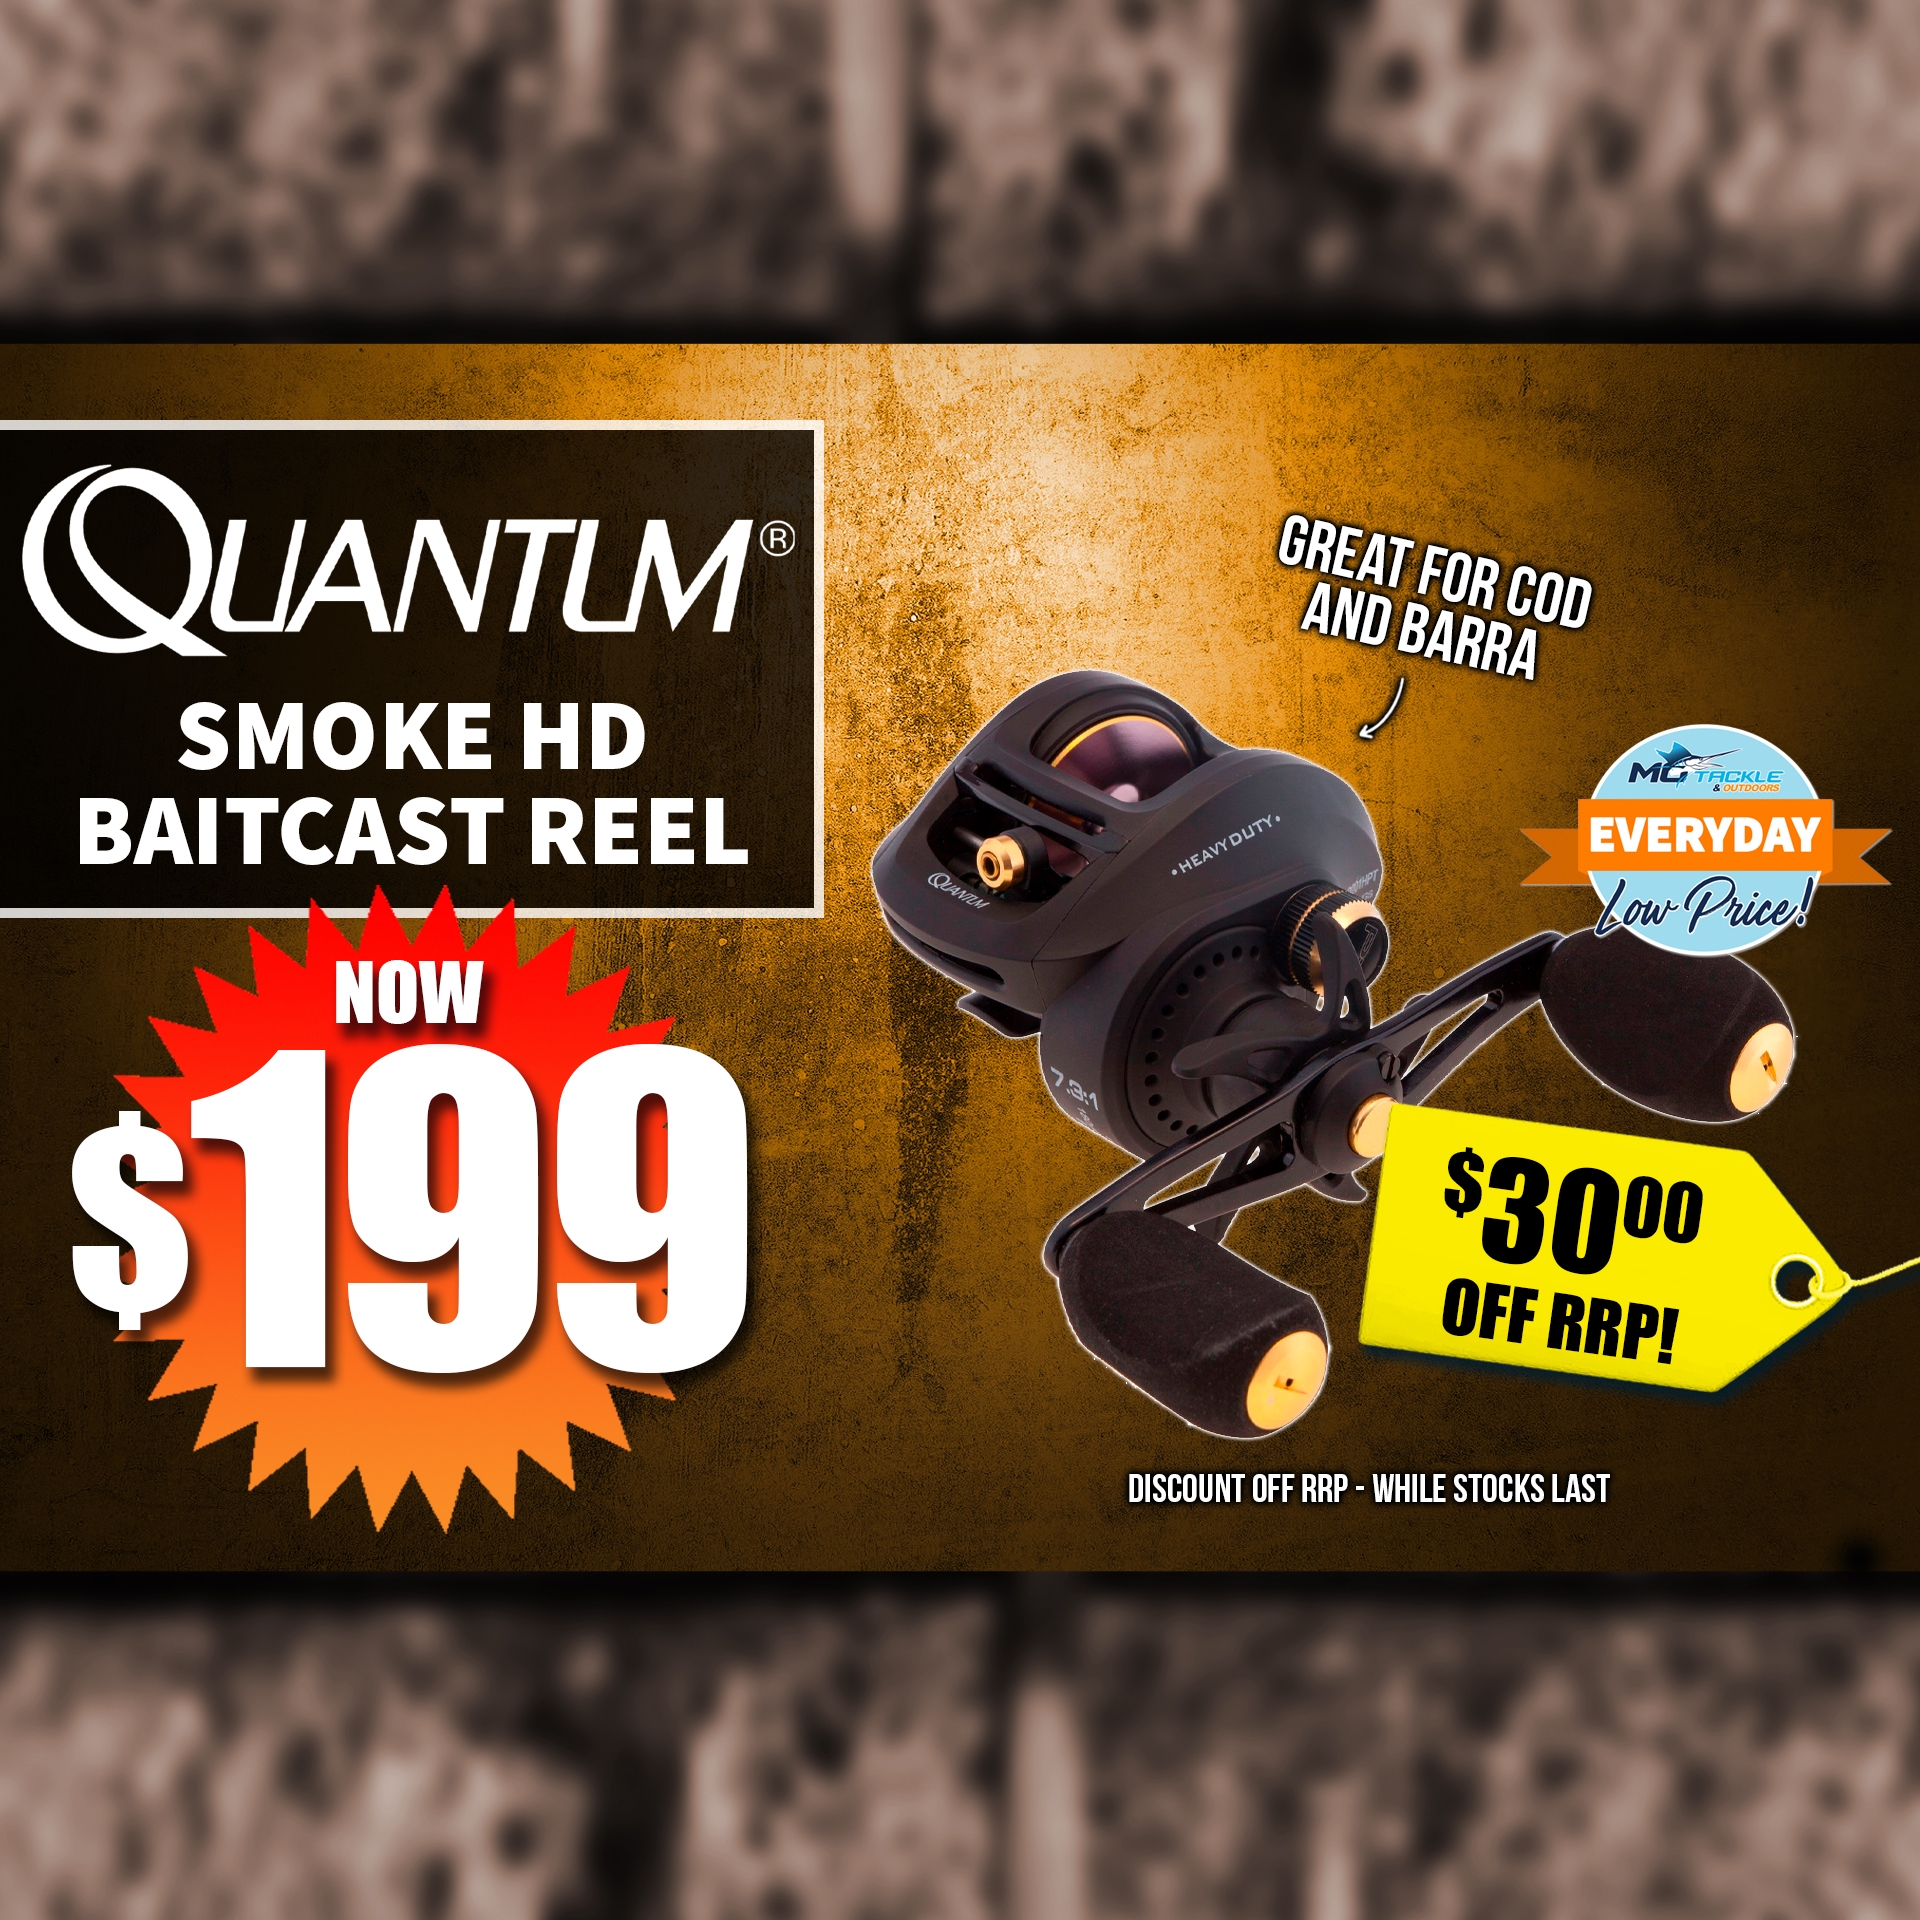 Quantum Smoke Heavy Duty Baitcast Reel $199